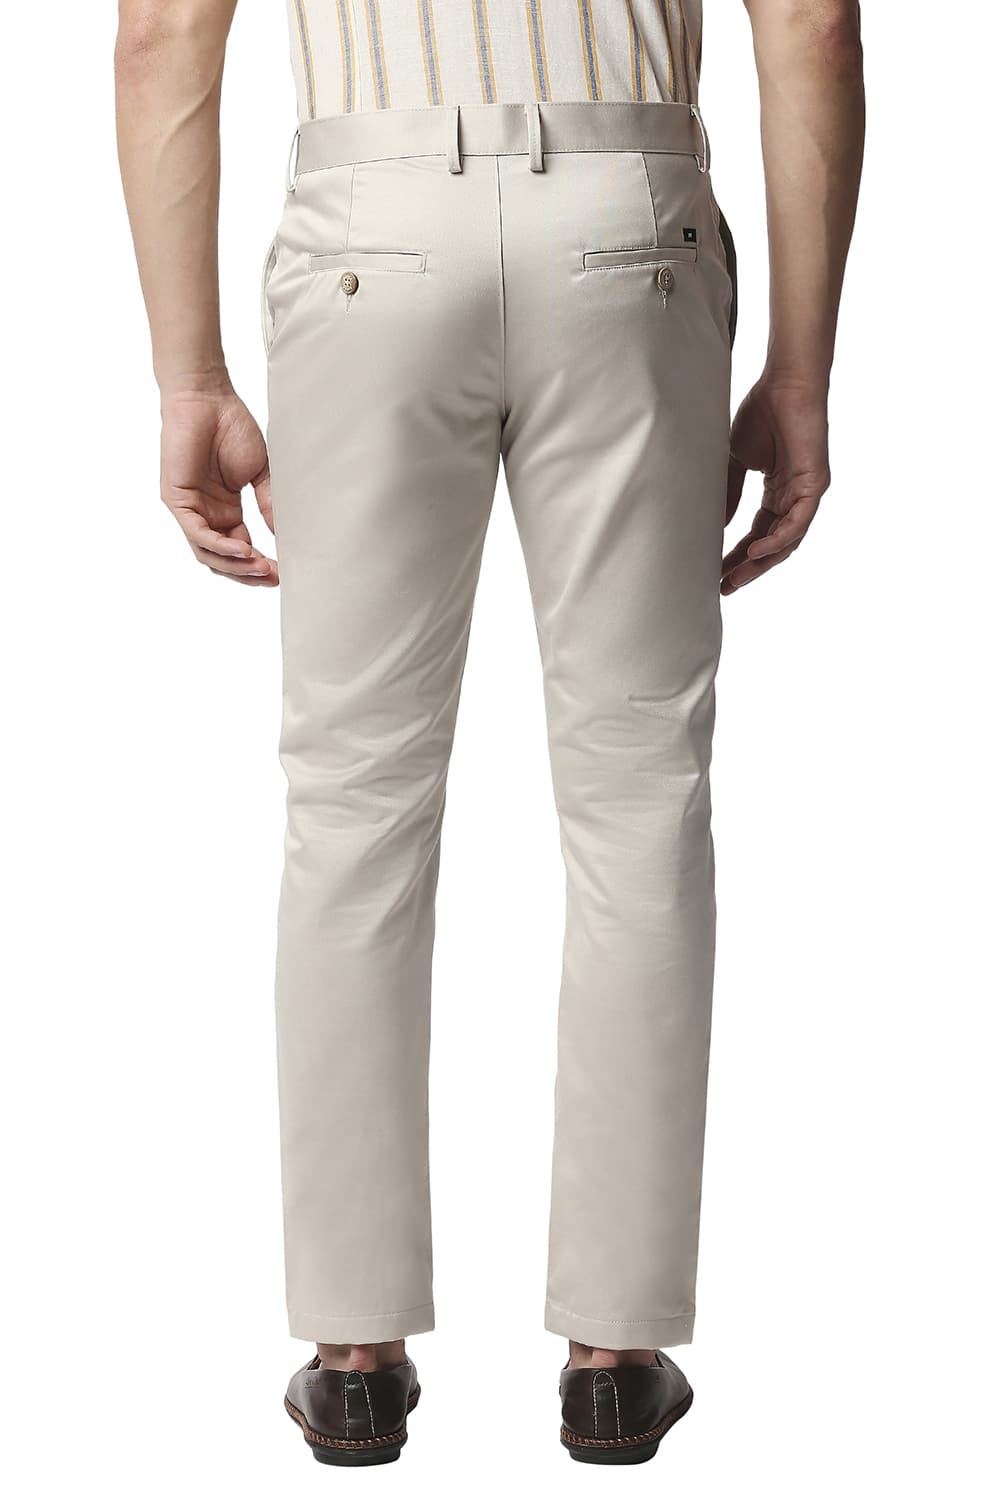 Basics | Basics Tapered Fit Light Grey Satin Trousers 1